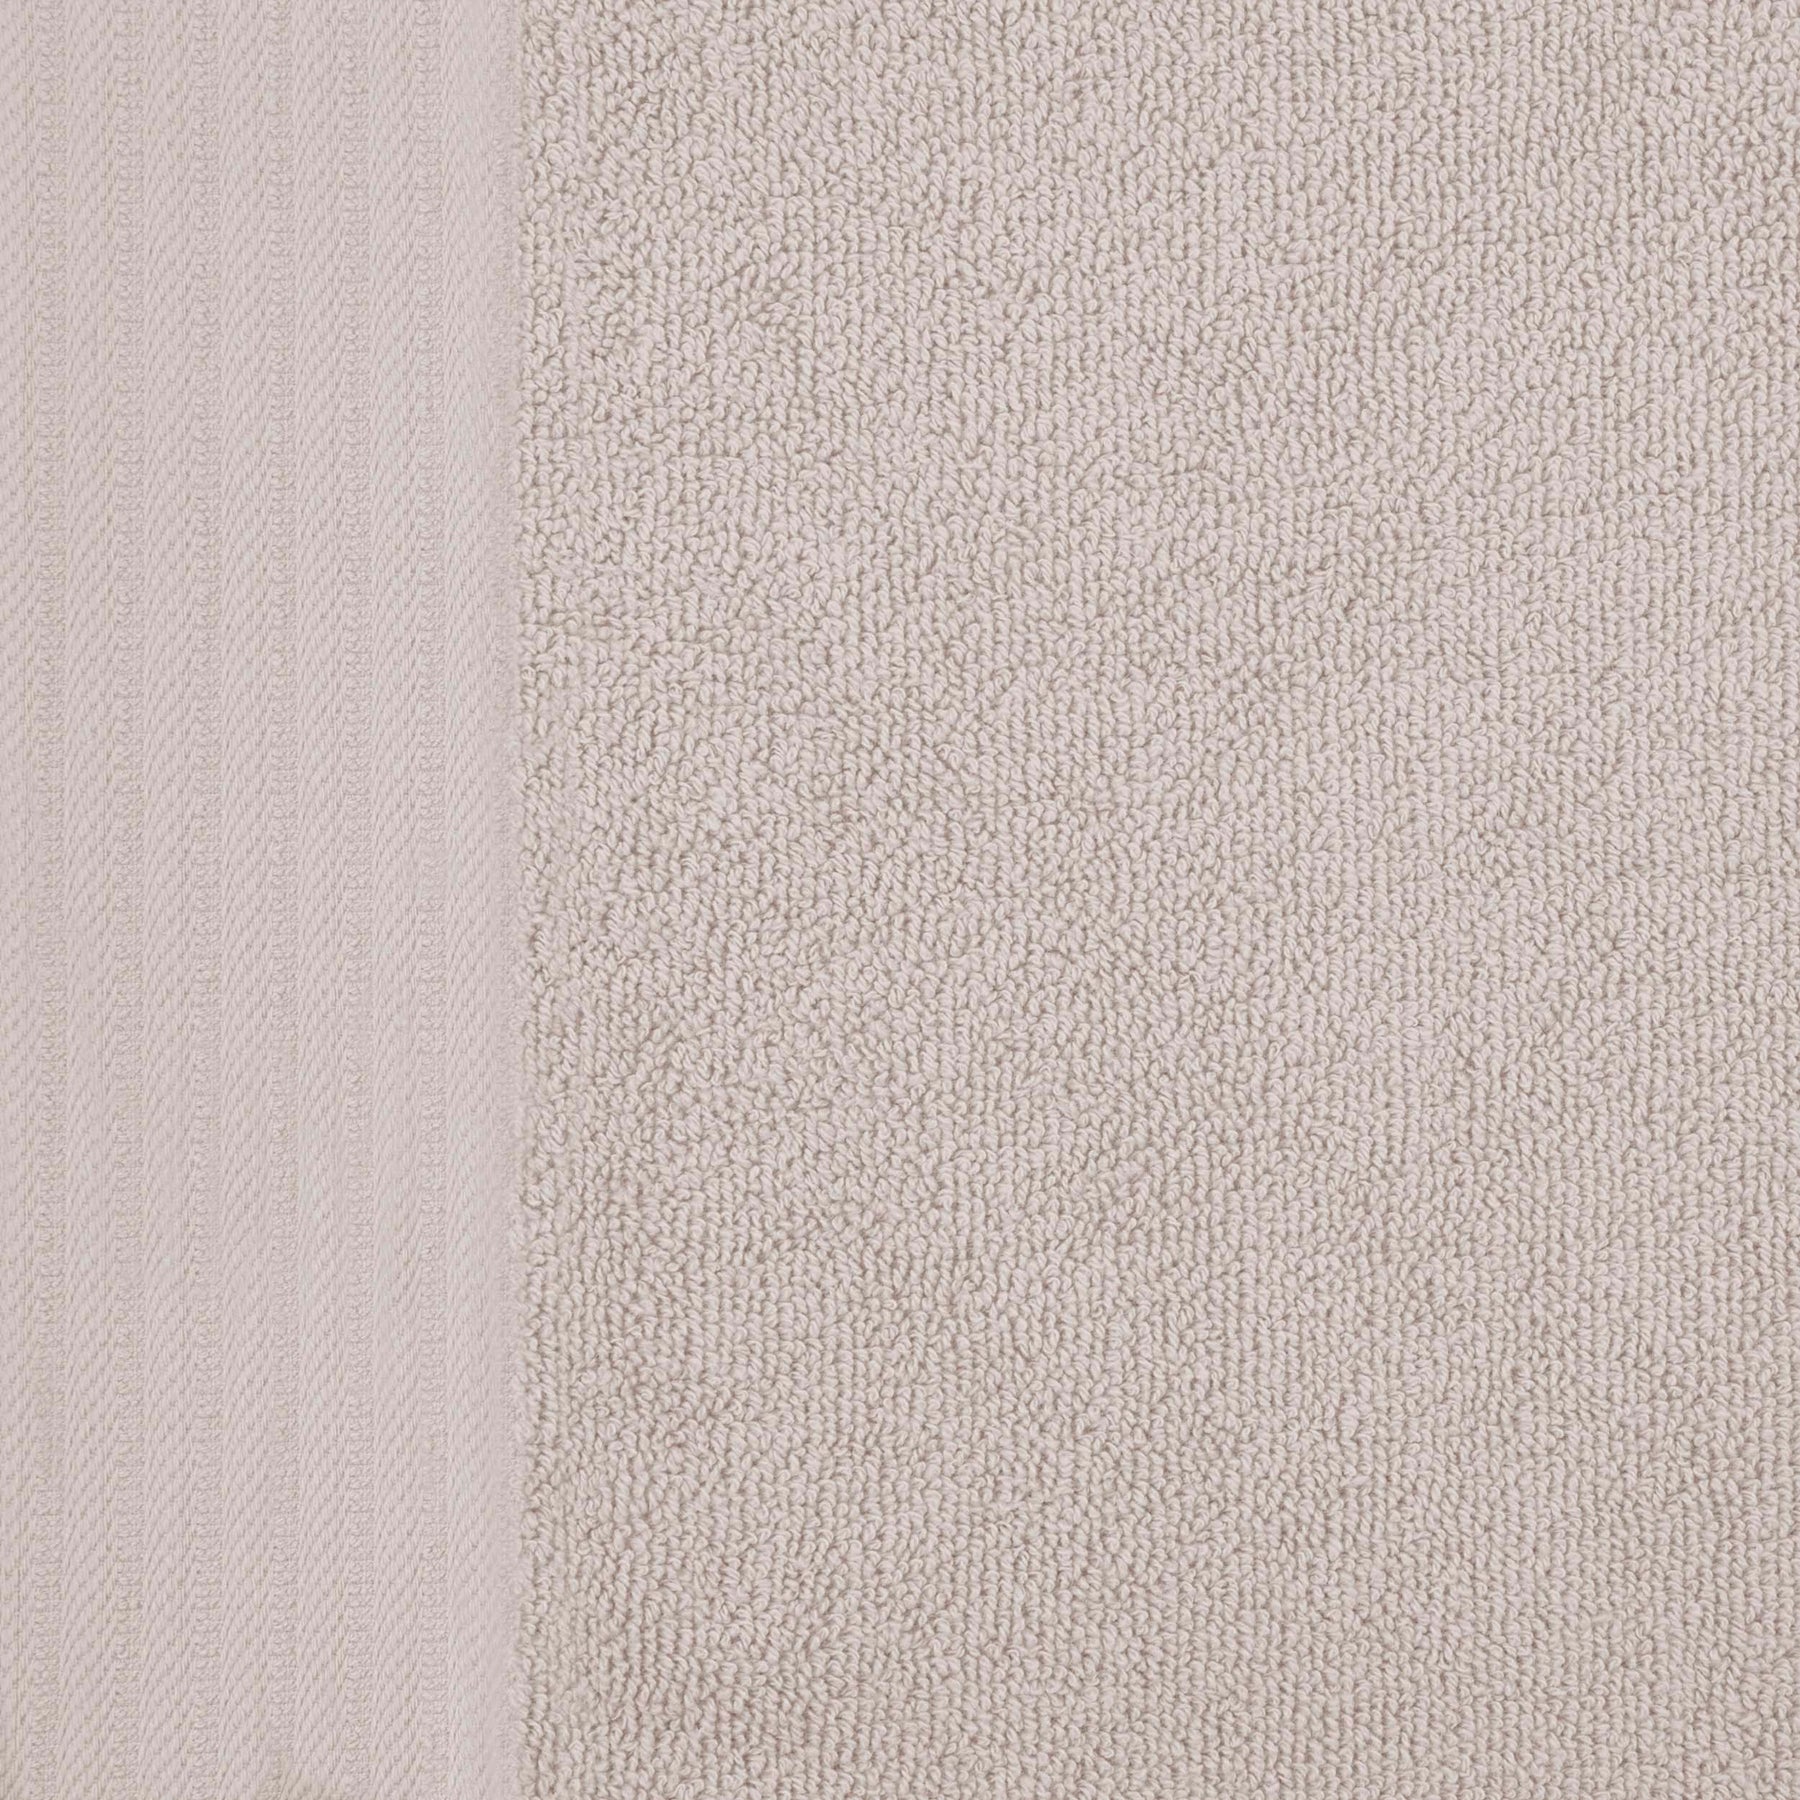 Premium Turkish Cotton Jacquard Herringbone and Solid 12-Piece Face Towel/ Washcloth Set -  Ivory